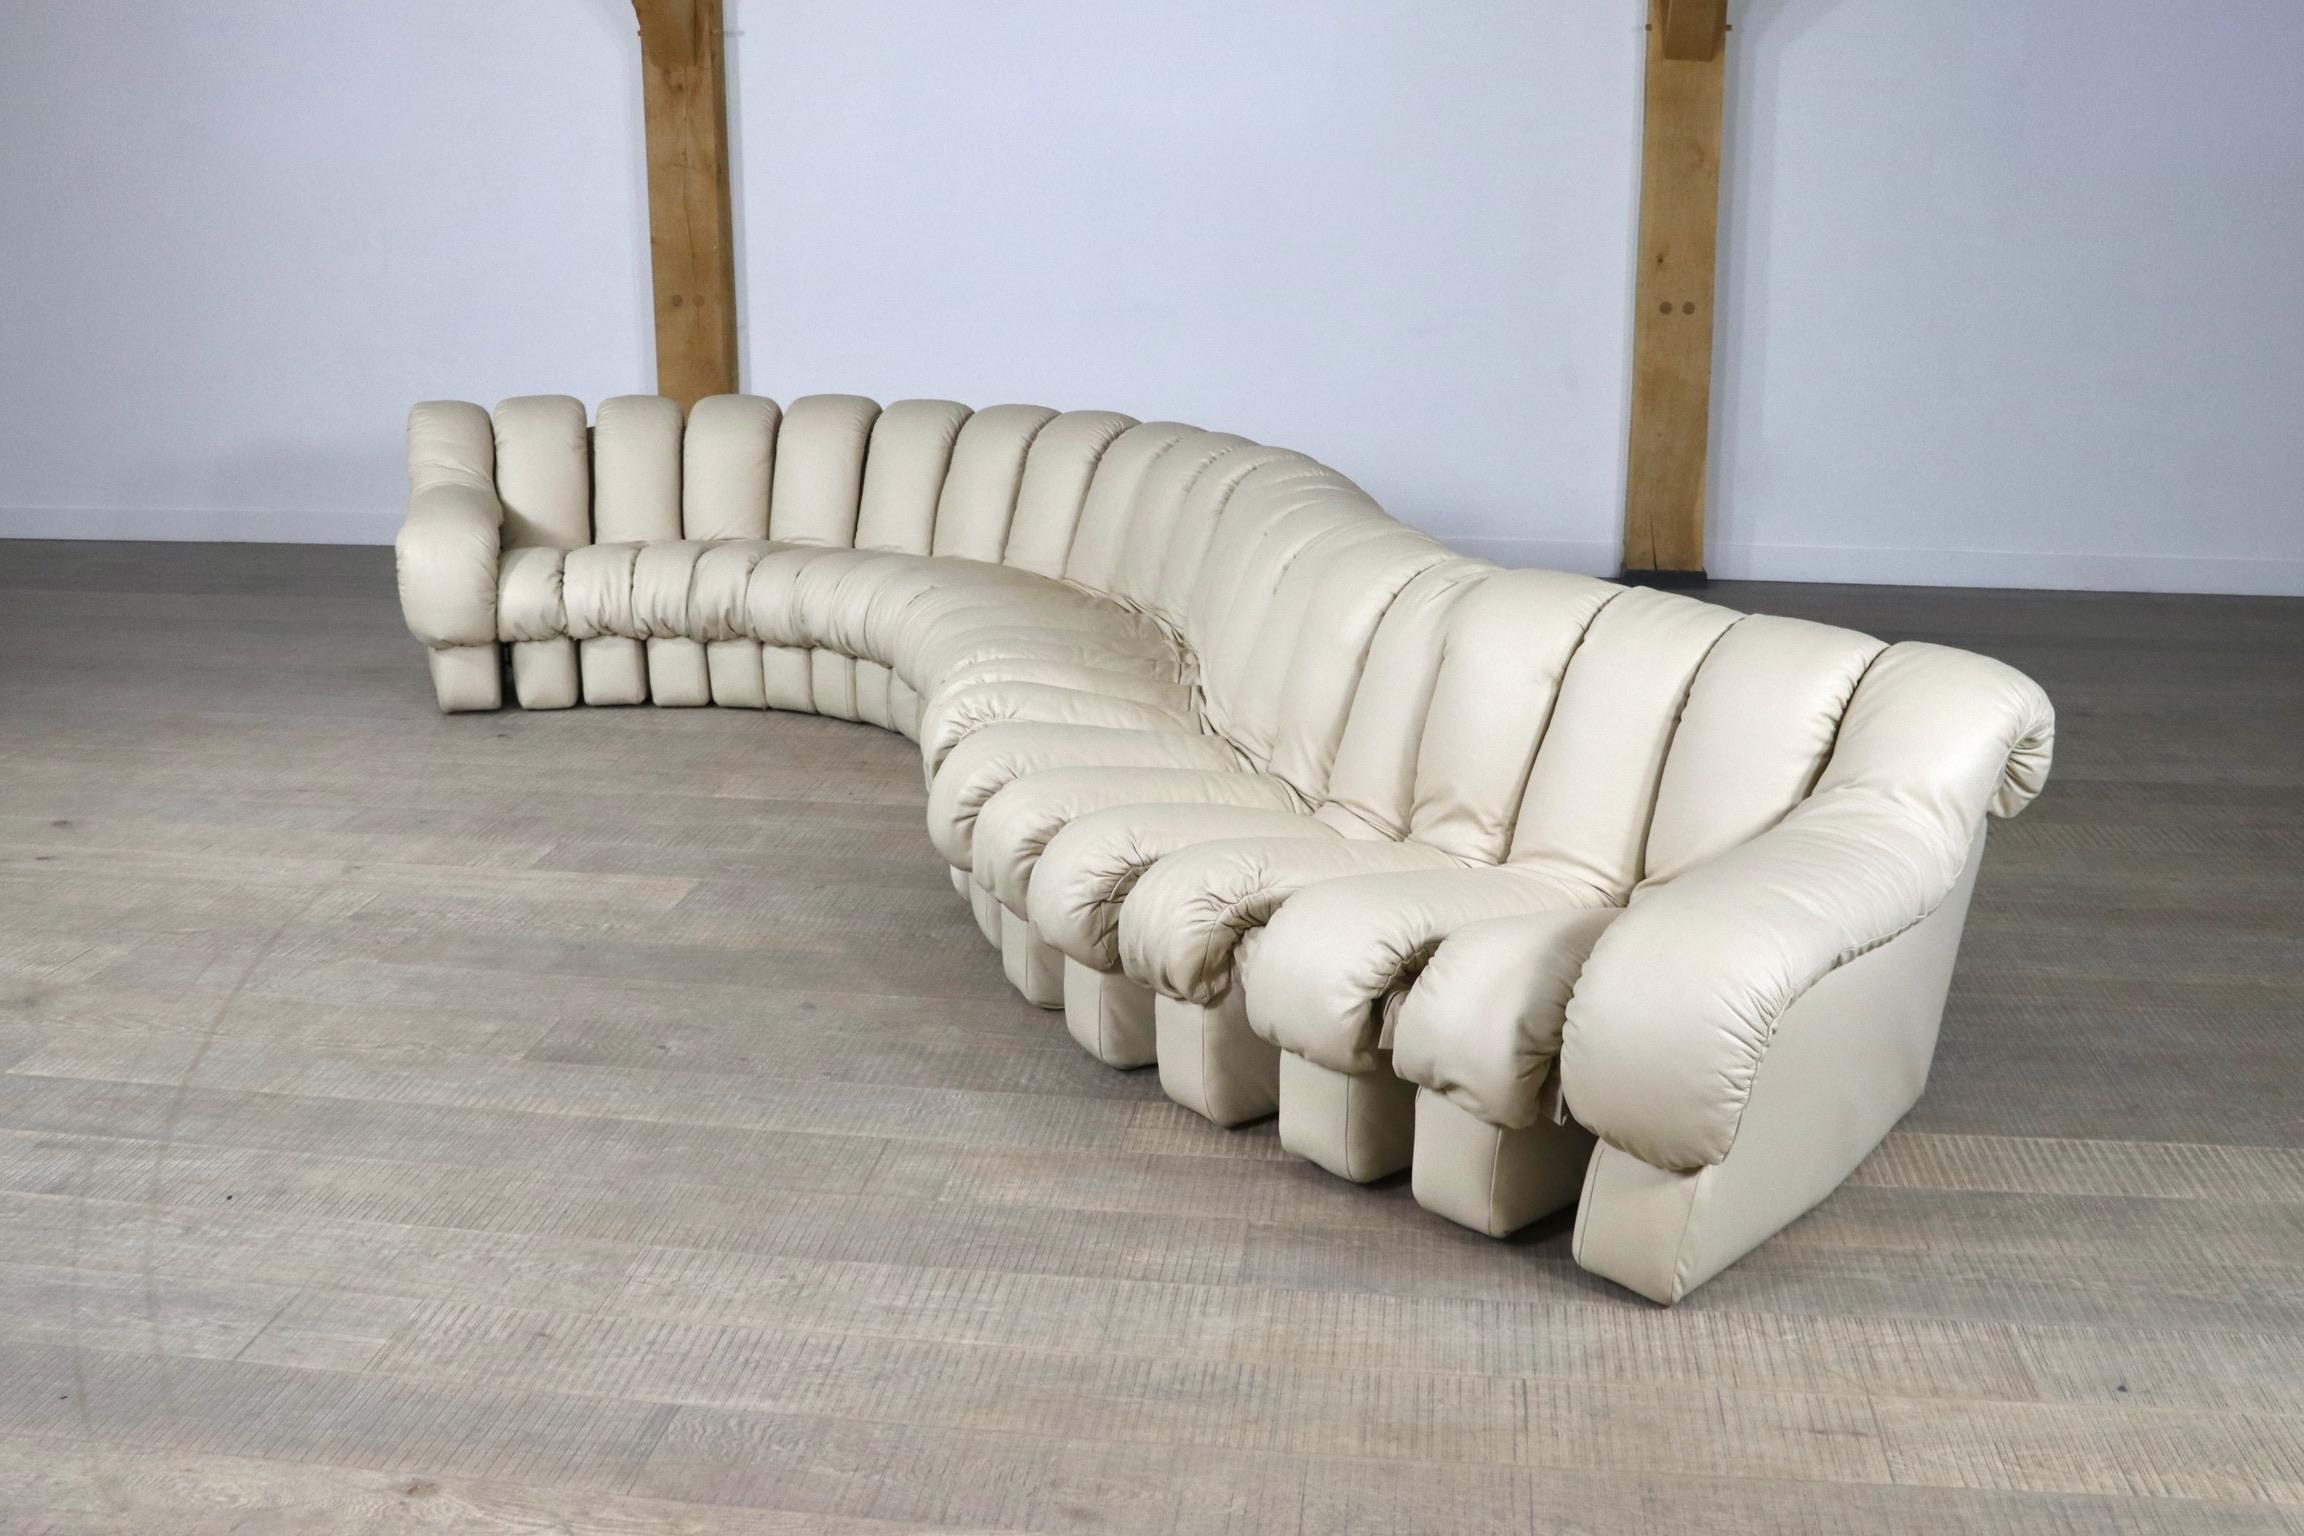 De Sede Ds 600 “Non-Stop” Cream Leather Sofa by Heinz Ulrich, Ueli Berger  6